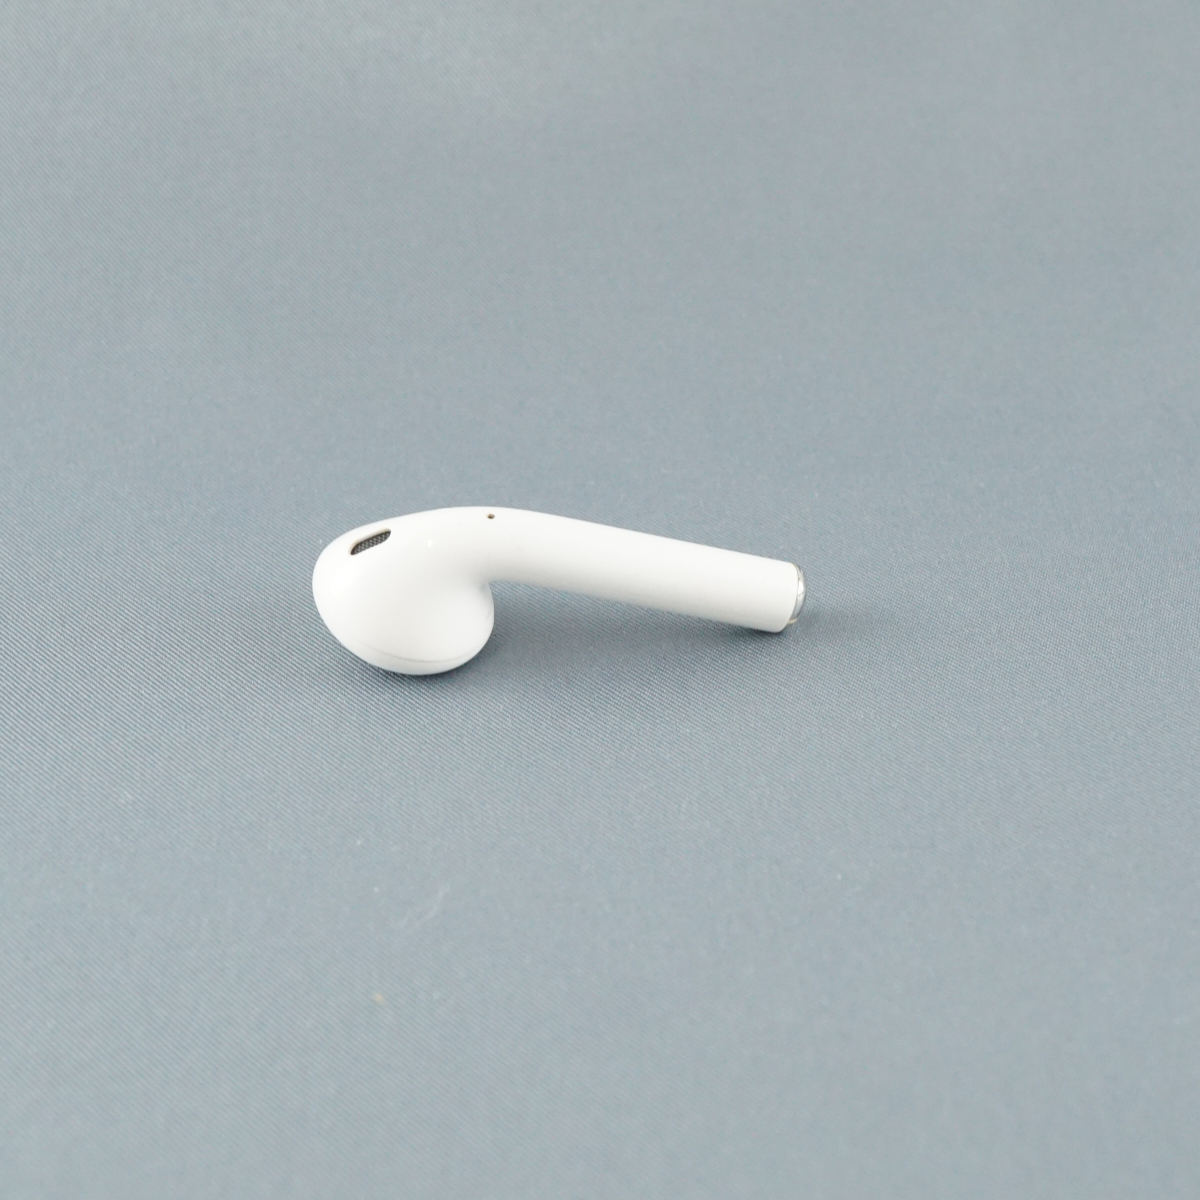 Apple AirPods エアーポッズUSED品第一世代右イヤホンのみR 片耳A1523